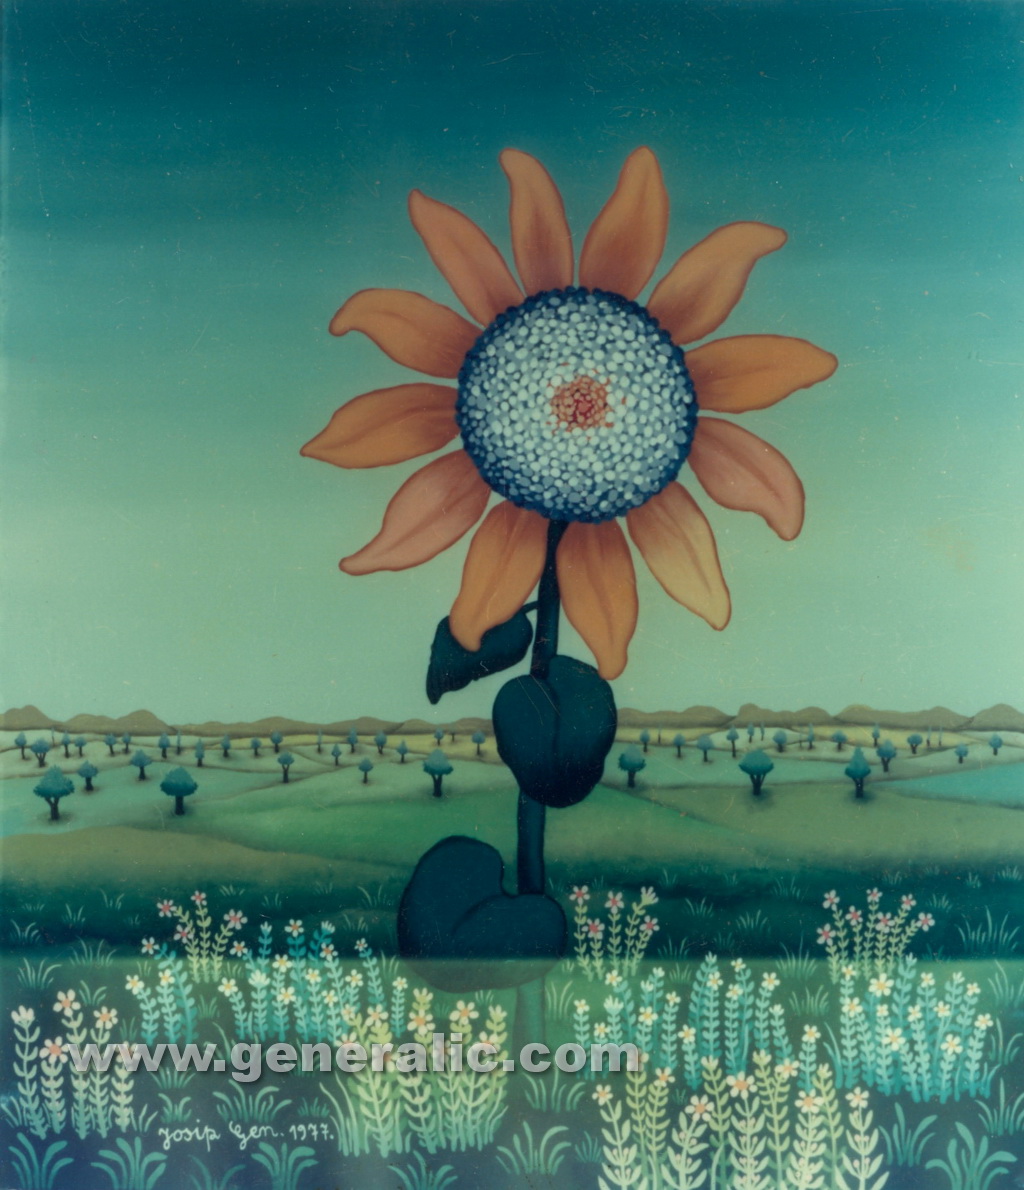 Josip Generalic, 1977, Sunflower, oil on glass